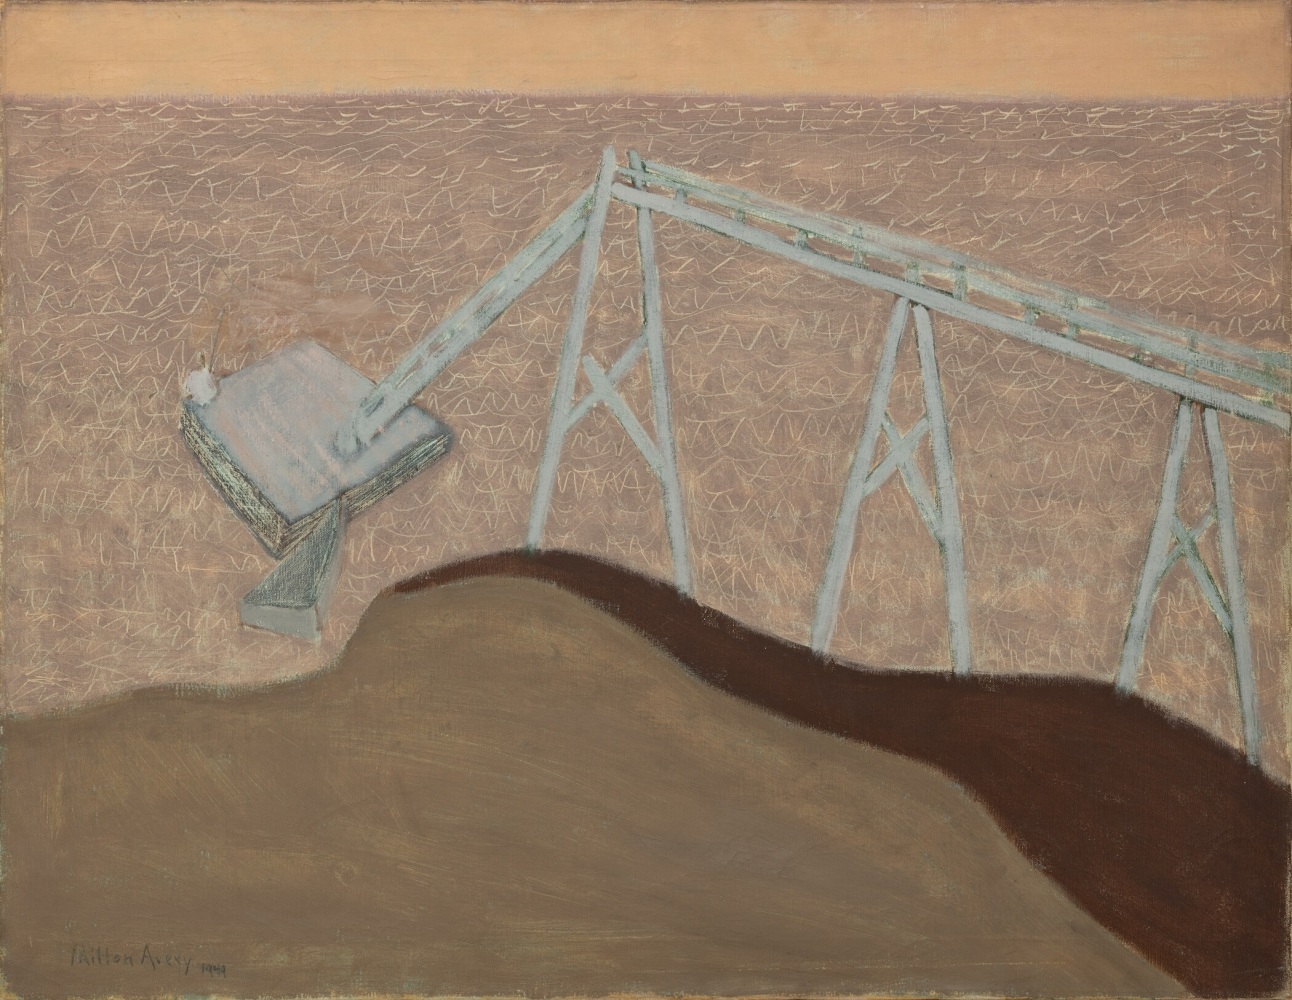 Private Pier

1949

Oil on canvas

28 x 36 inches

71.1 x 91.4cm